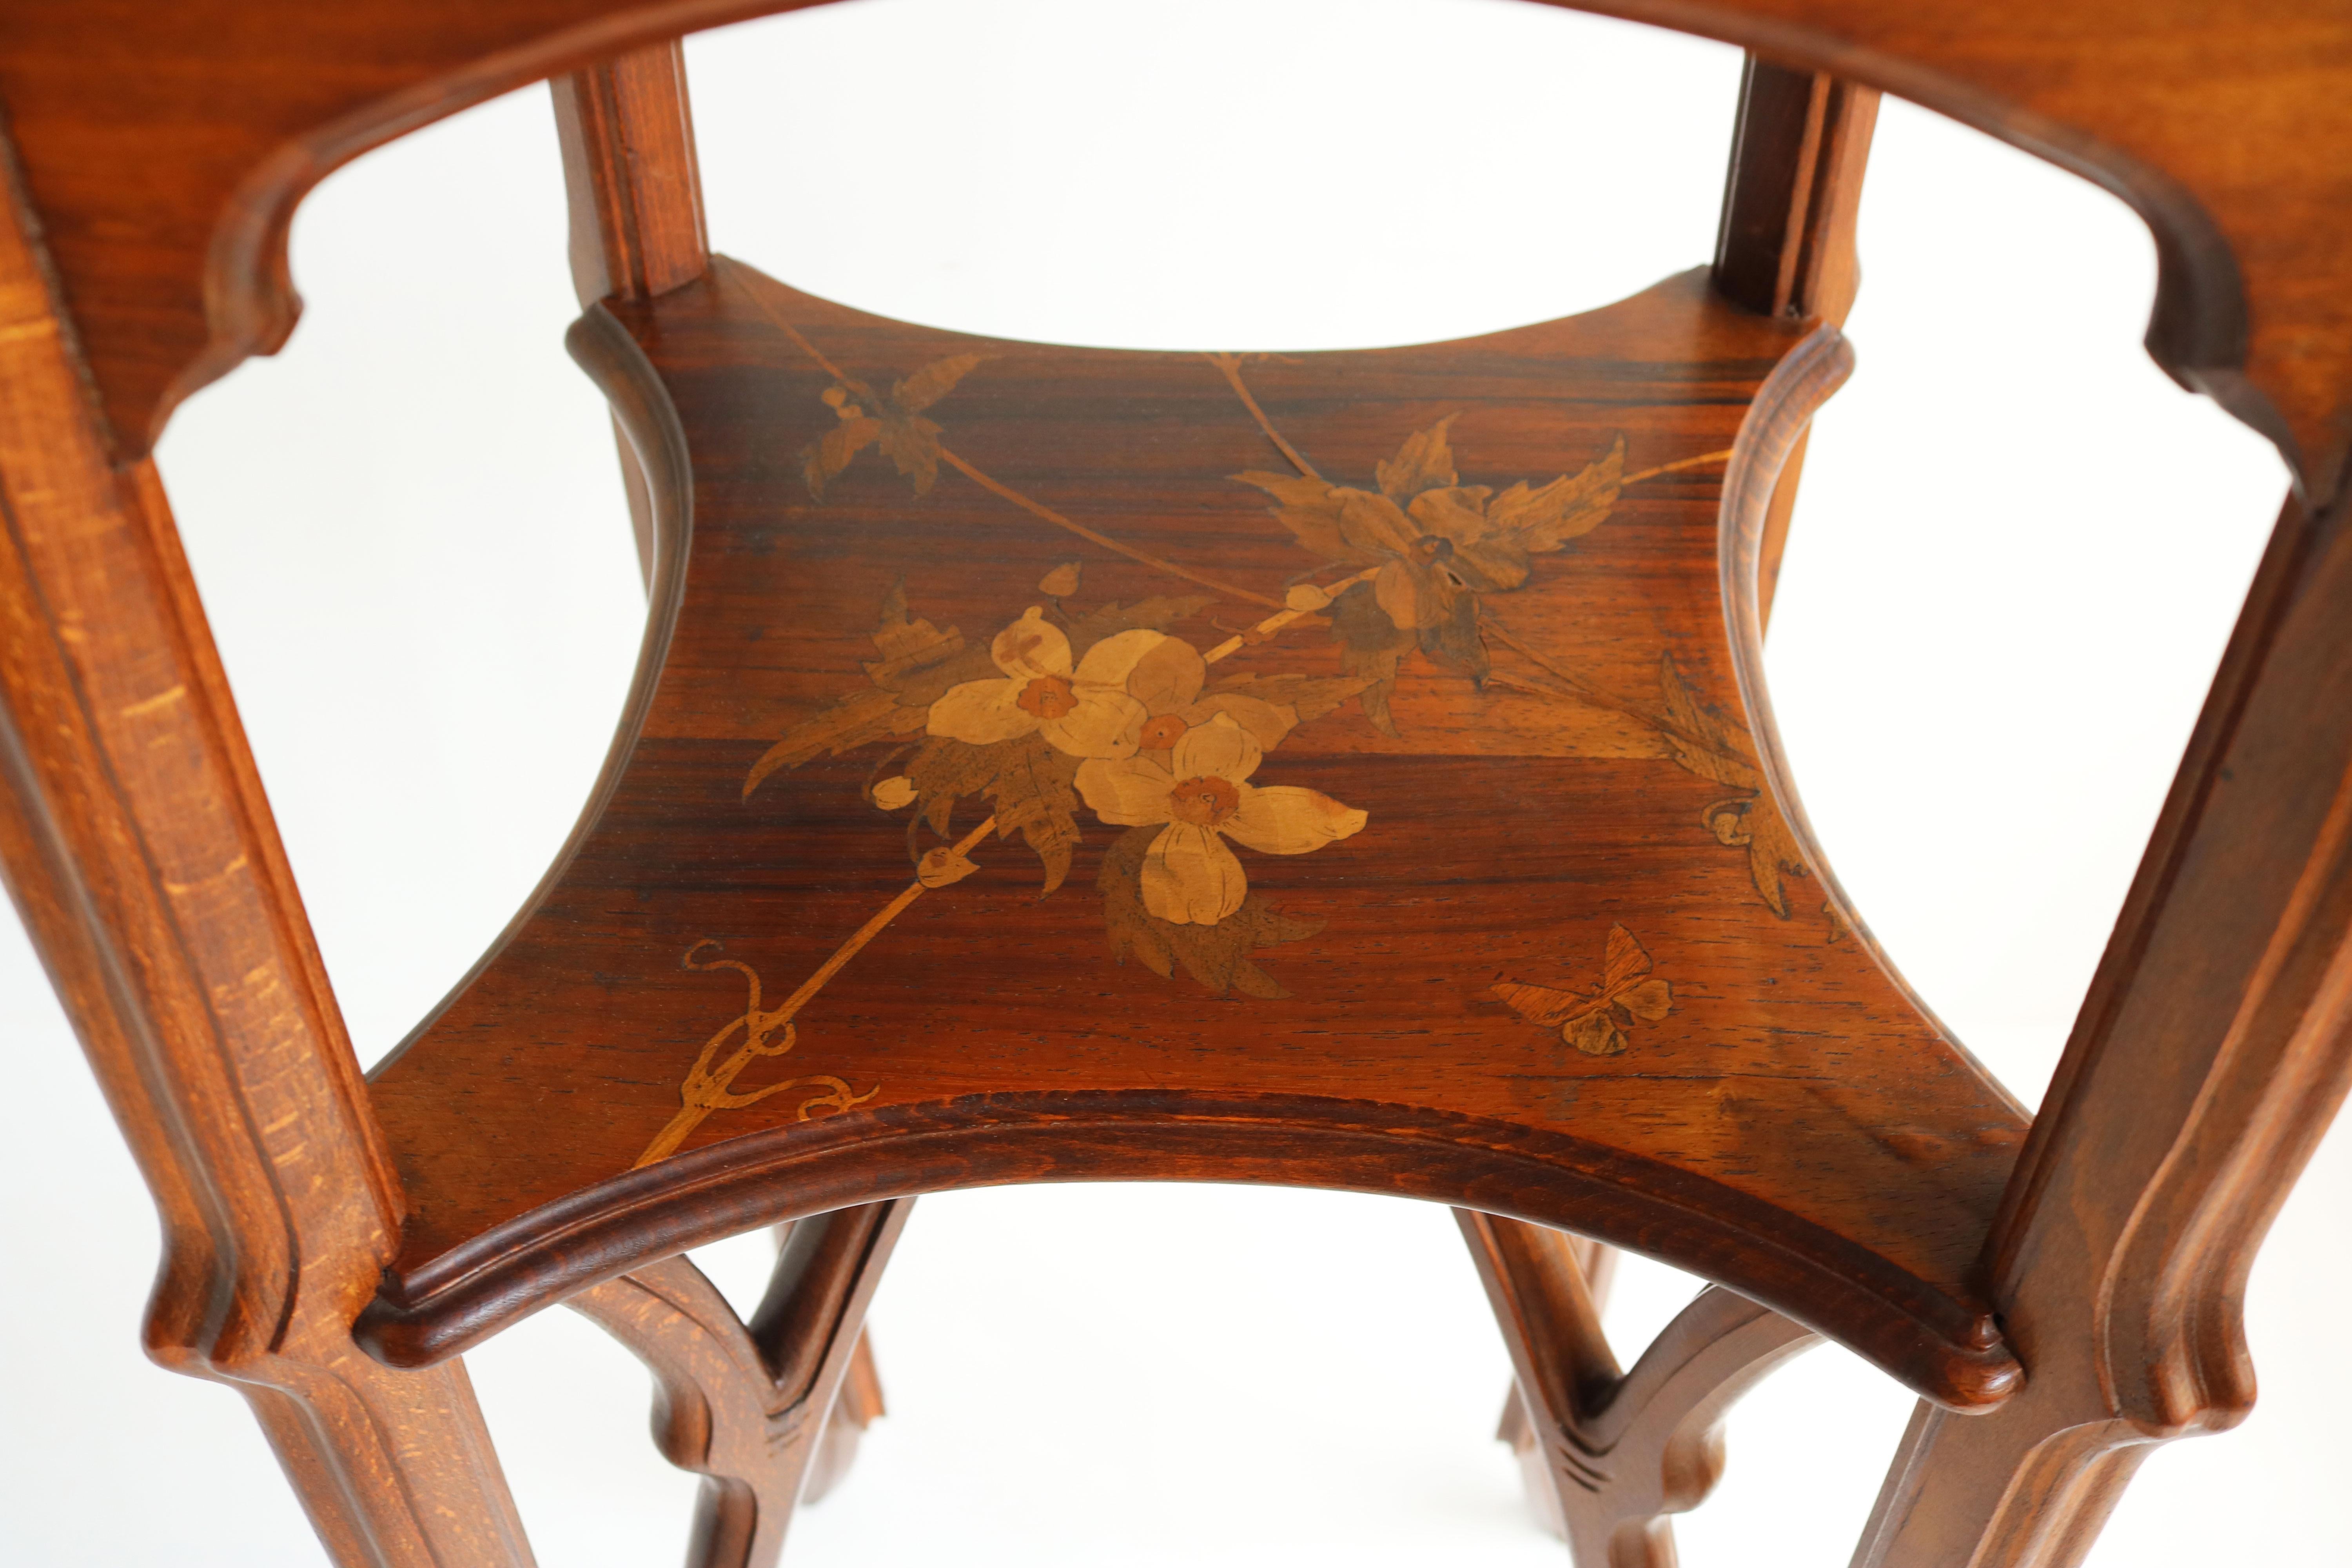 Original Art Nouveau Pedestal by Emile Galle 1890 French Antique Inlaid Table For Sale 3